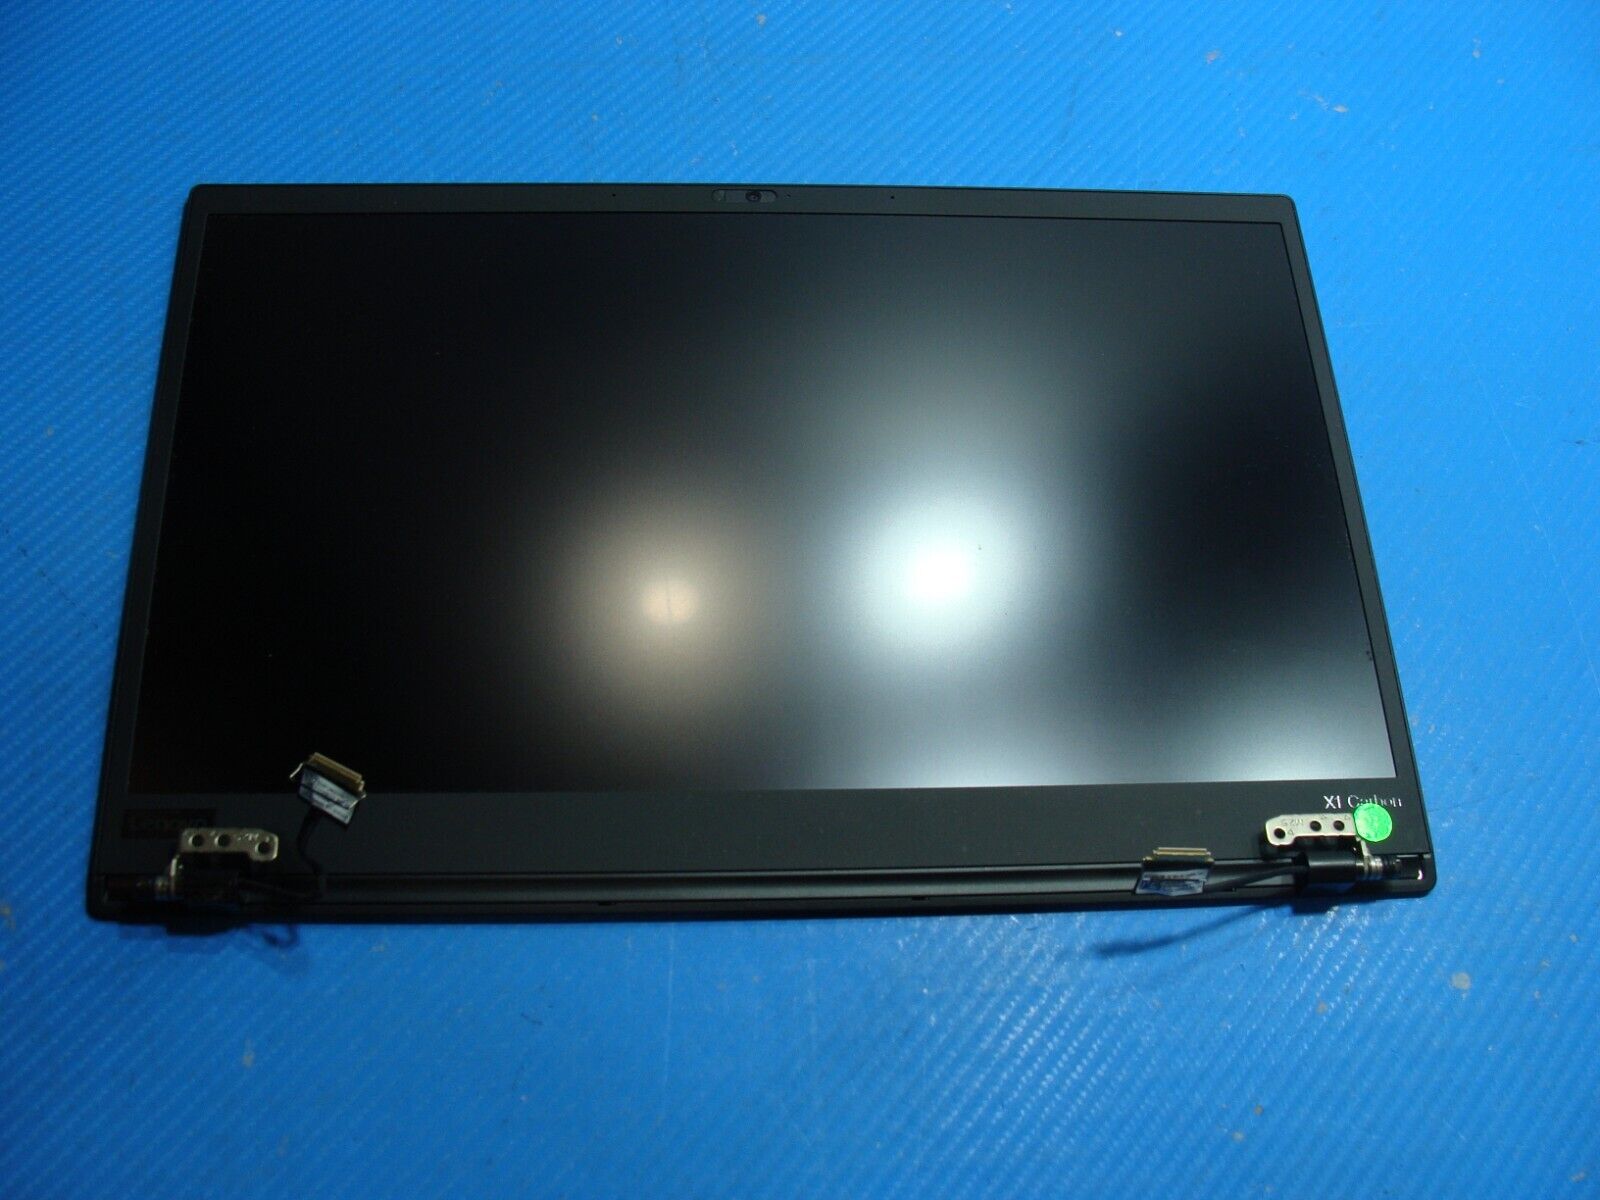 Lenovo ThinkPad X1 Carbon 6th Gen 14